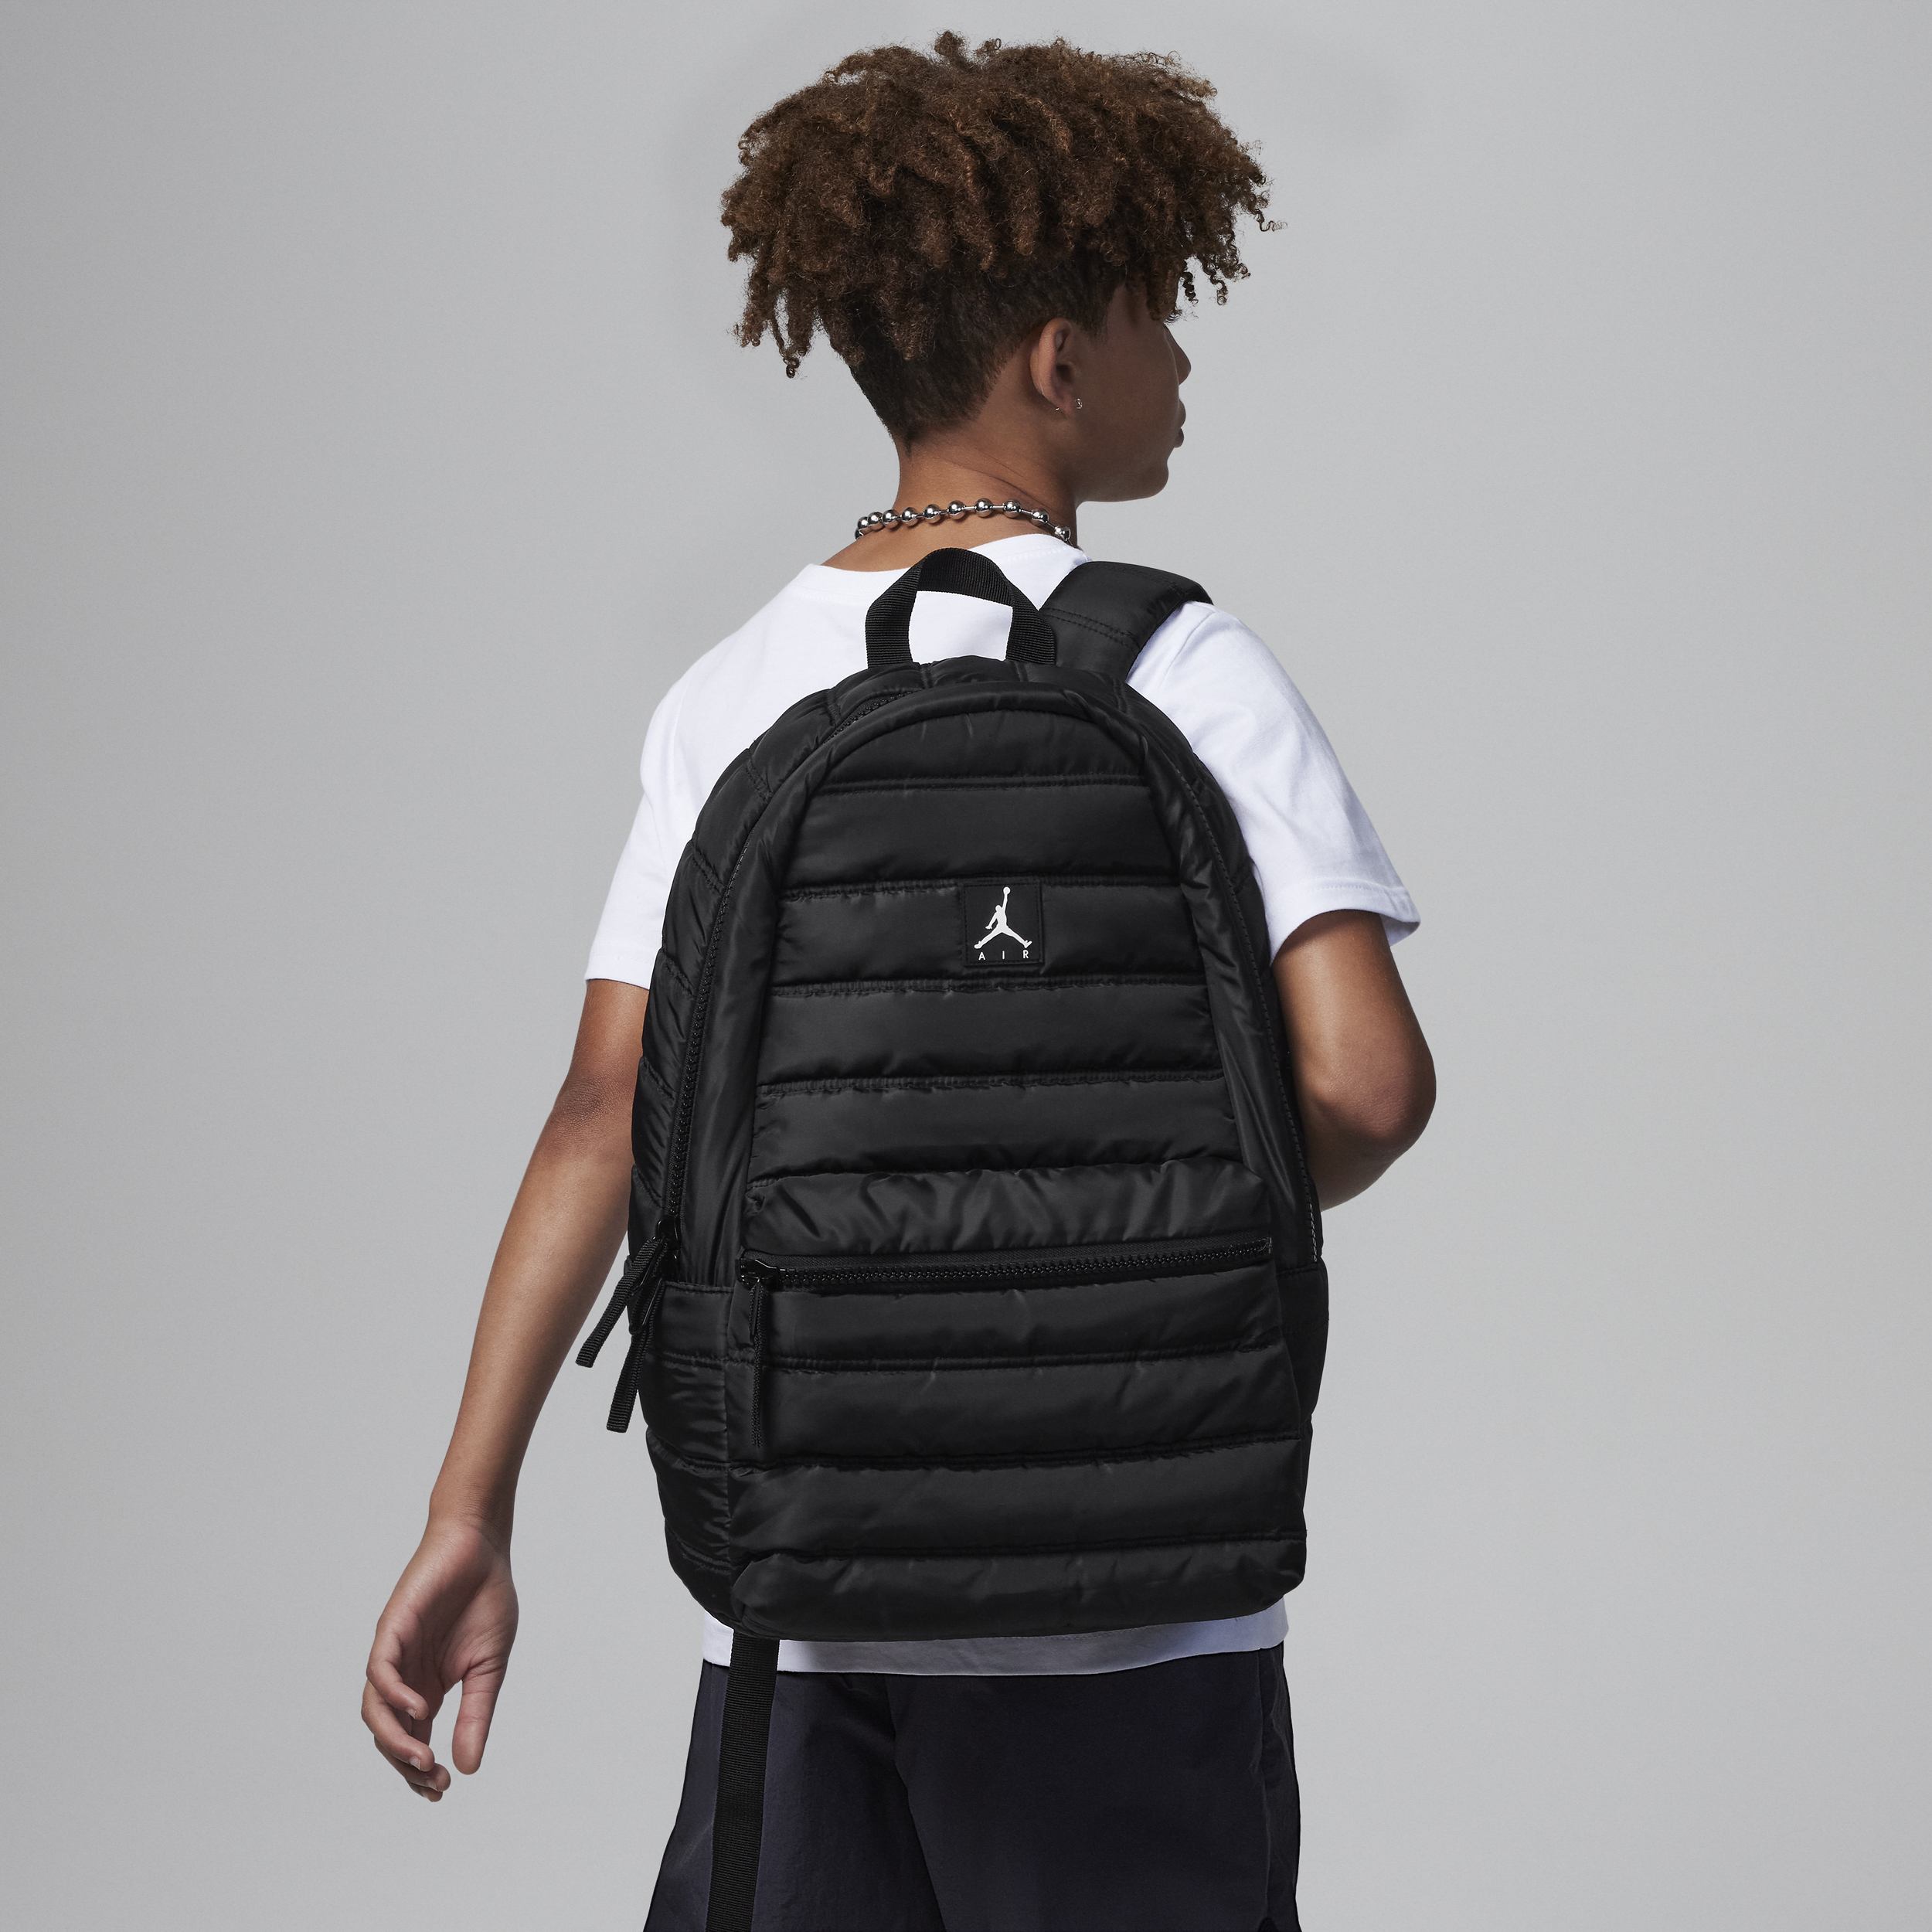 Jordan Quilted Backpack rugzak (19 liter) Zwart